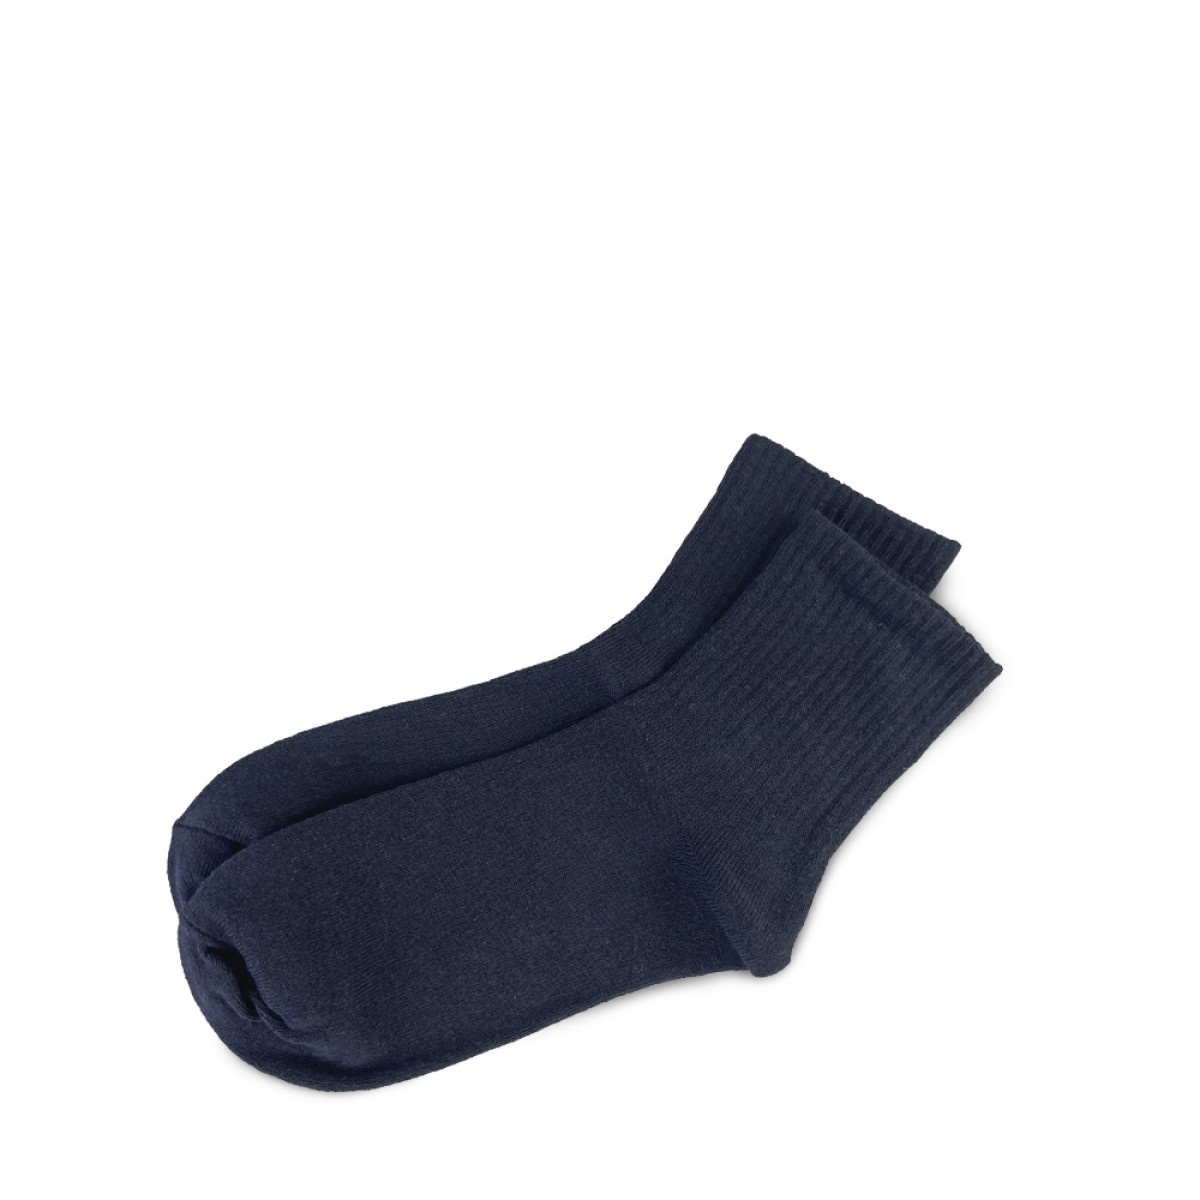 Middle Socks, Navy